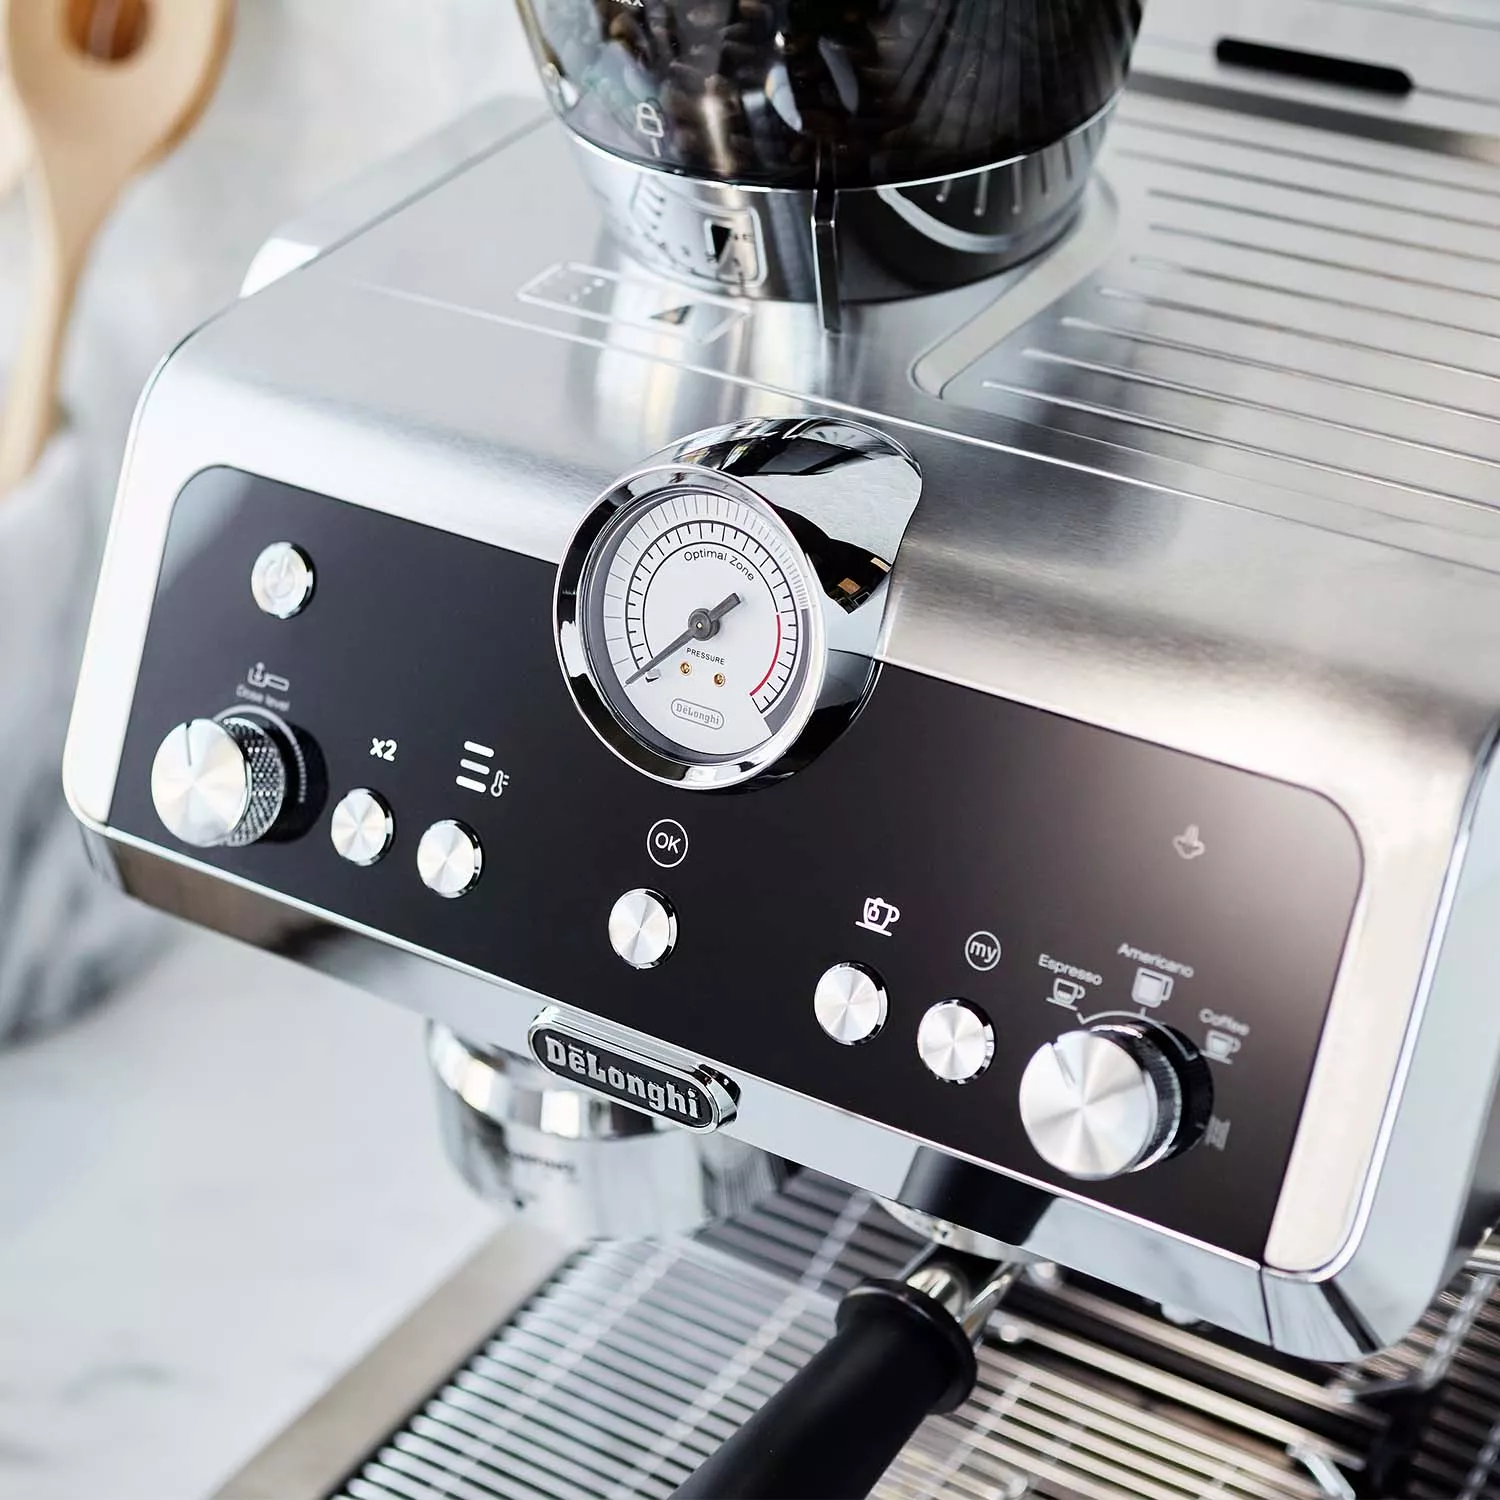 De&#8217;Longhi La Specialista Prestigio Espresso Machine